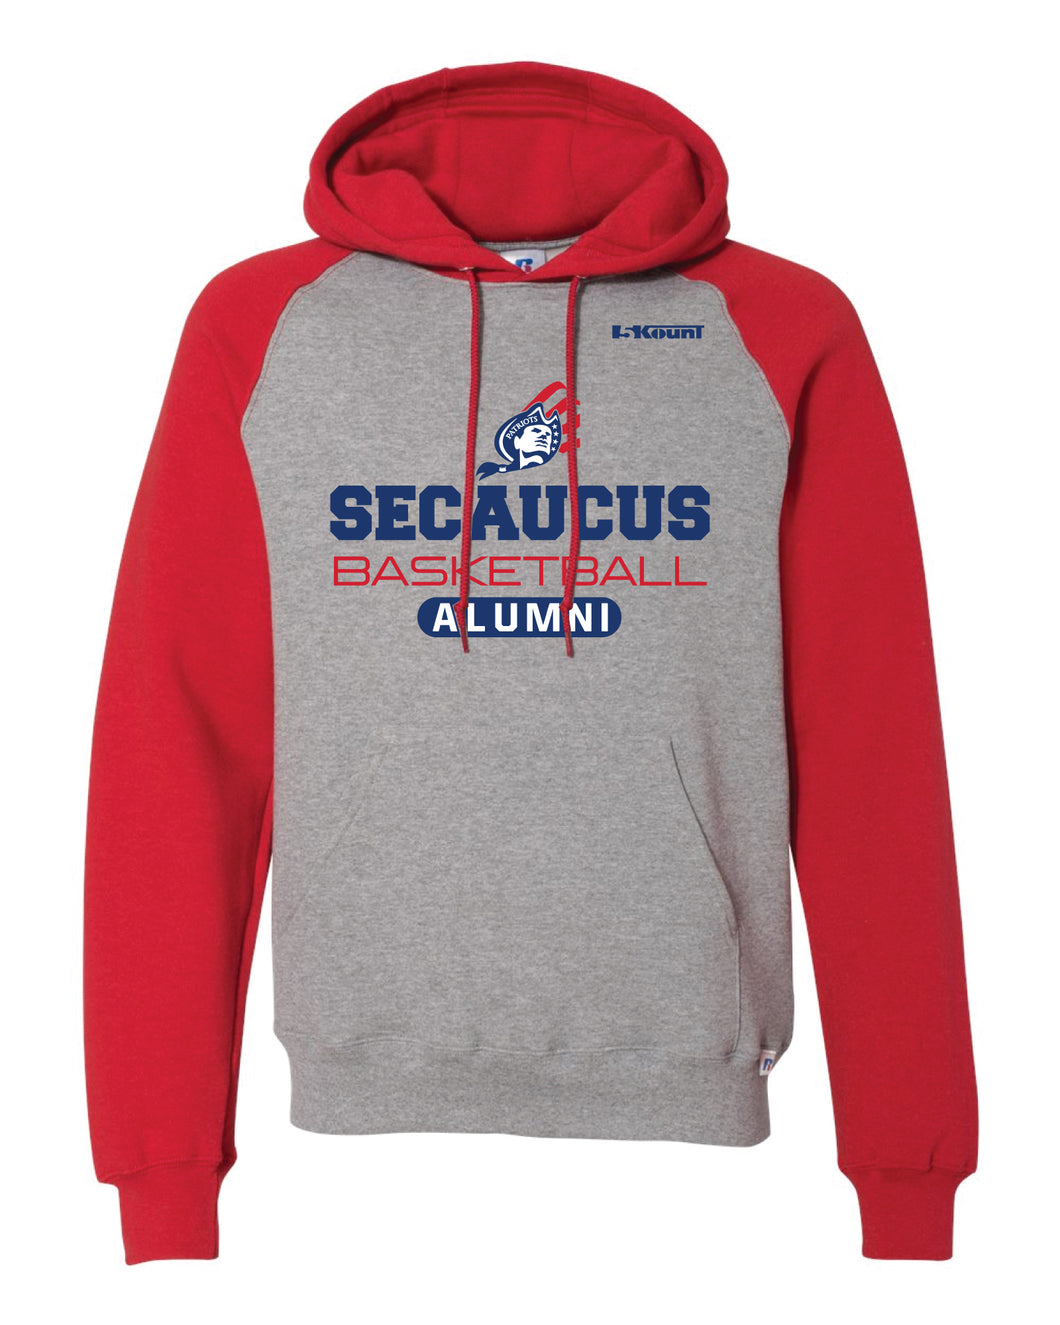 Secaucus High School Basketball Alumni Russell Athletic Colorblock Raglan Hooded Sweatshirt  - Grey/Red - 5KounT2018